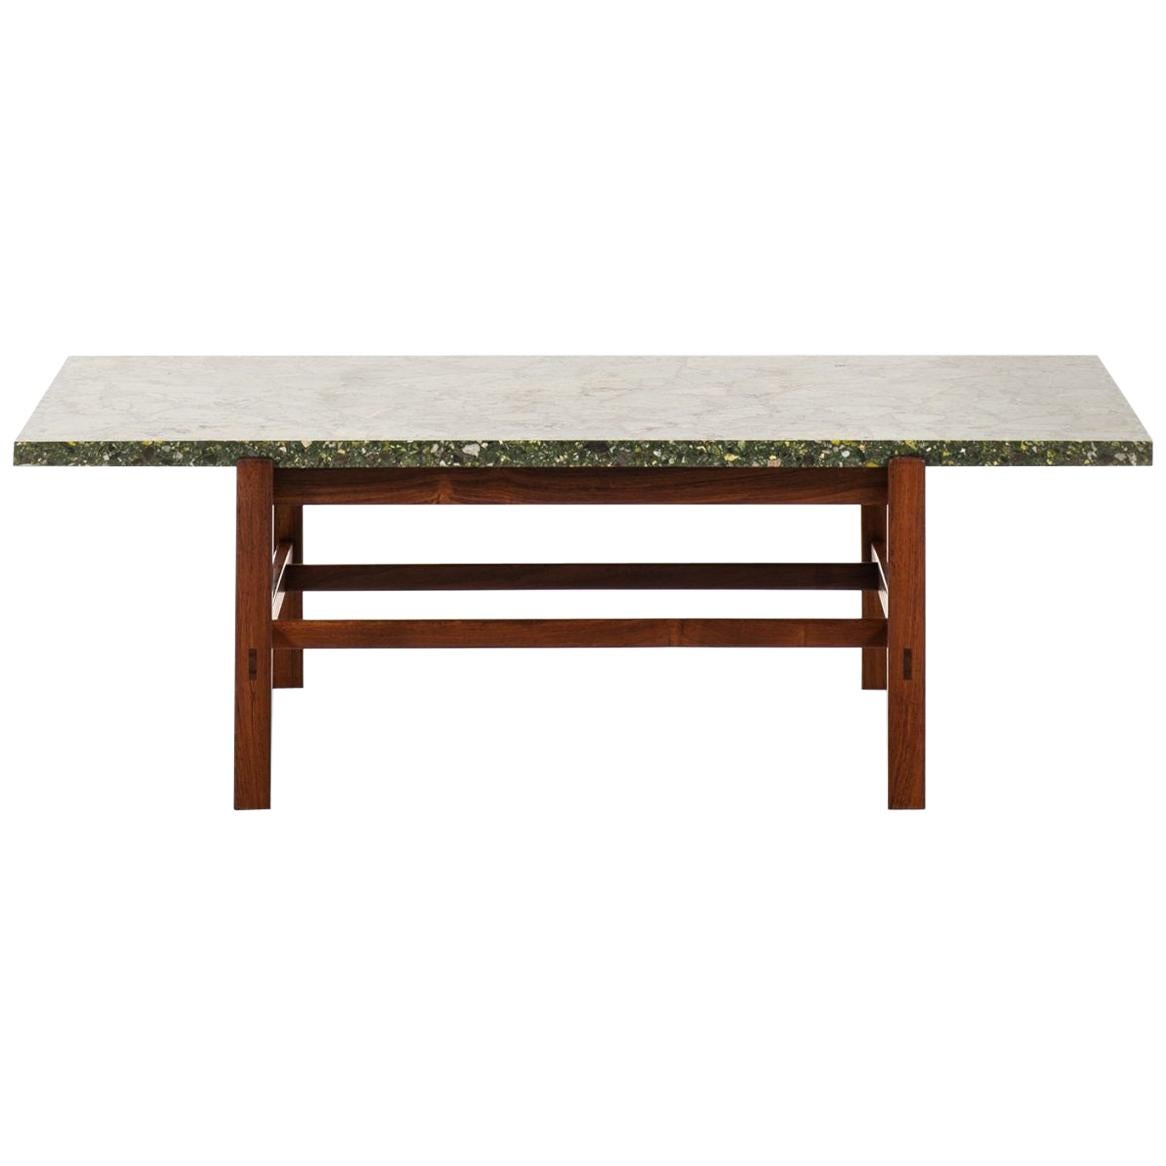 Inge Davidsson Side Table / Coffee Table by Cabinetmaker Ernst Johansson